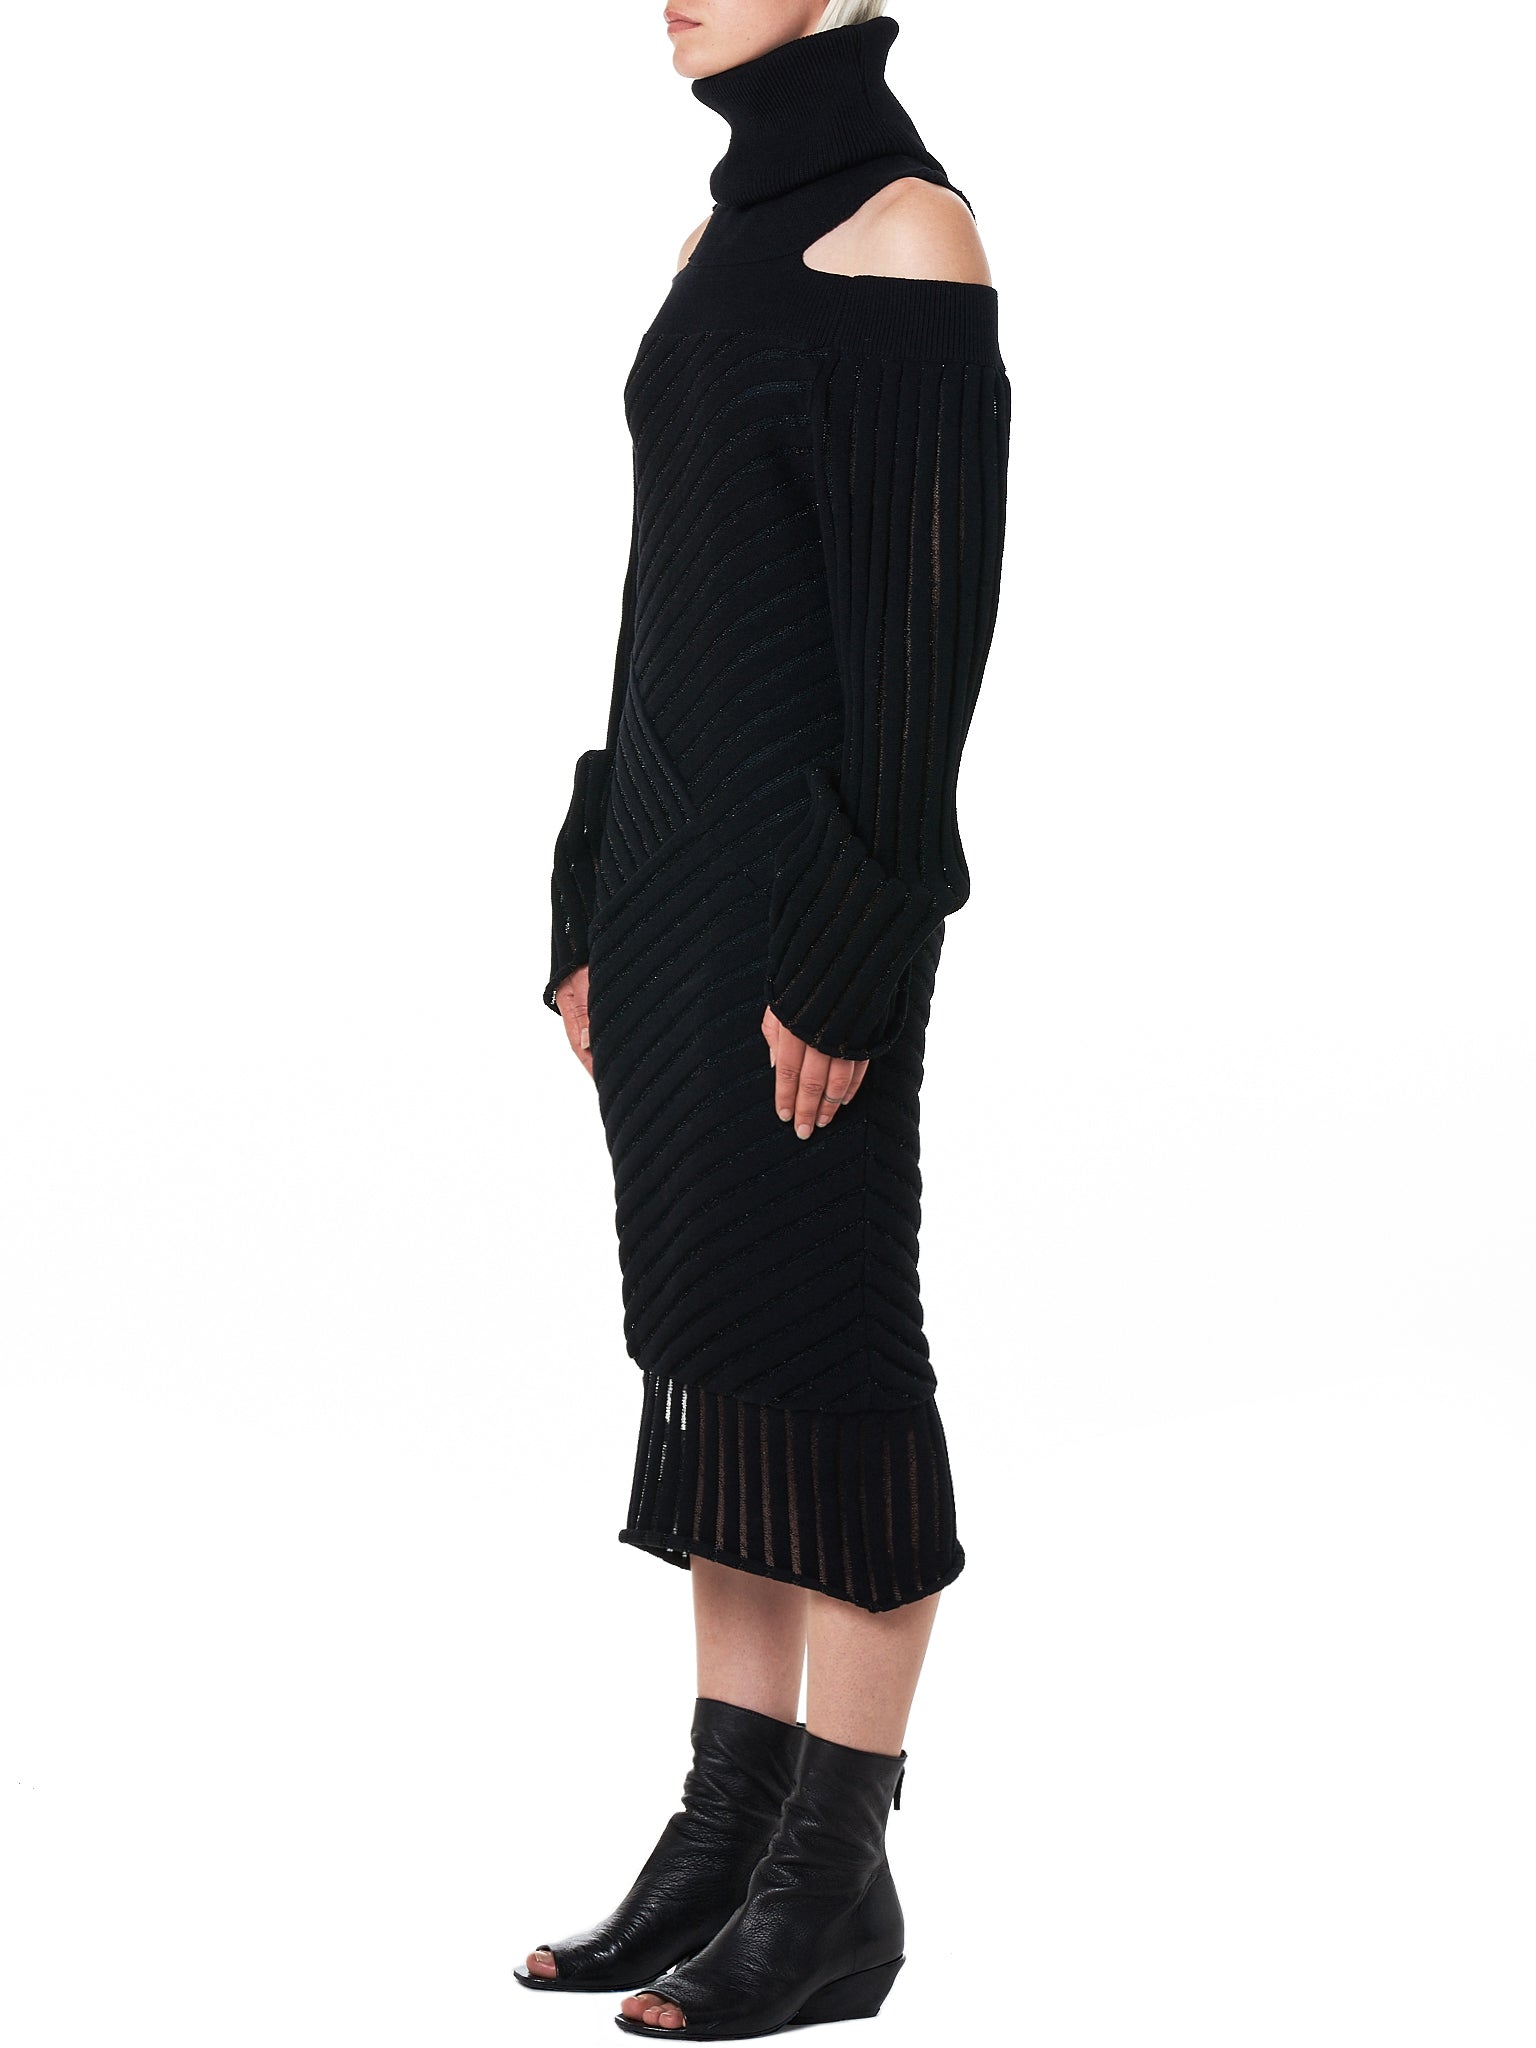 Knit Turtleneck Dress (D10-BLACK)